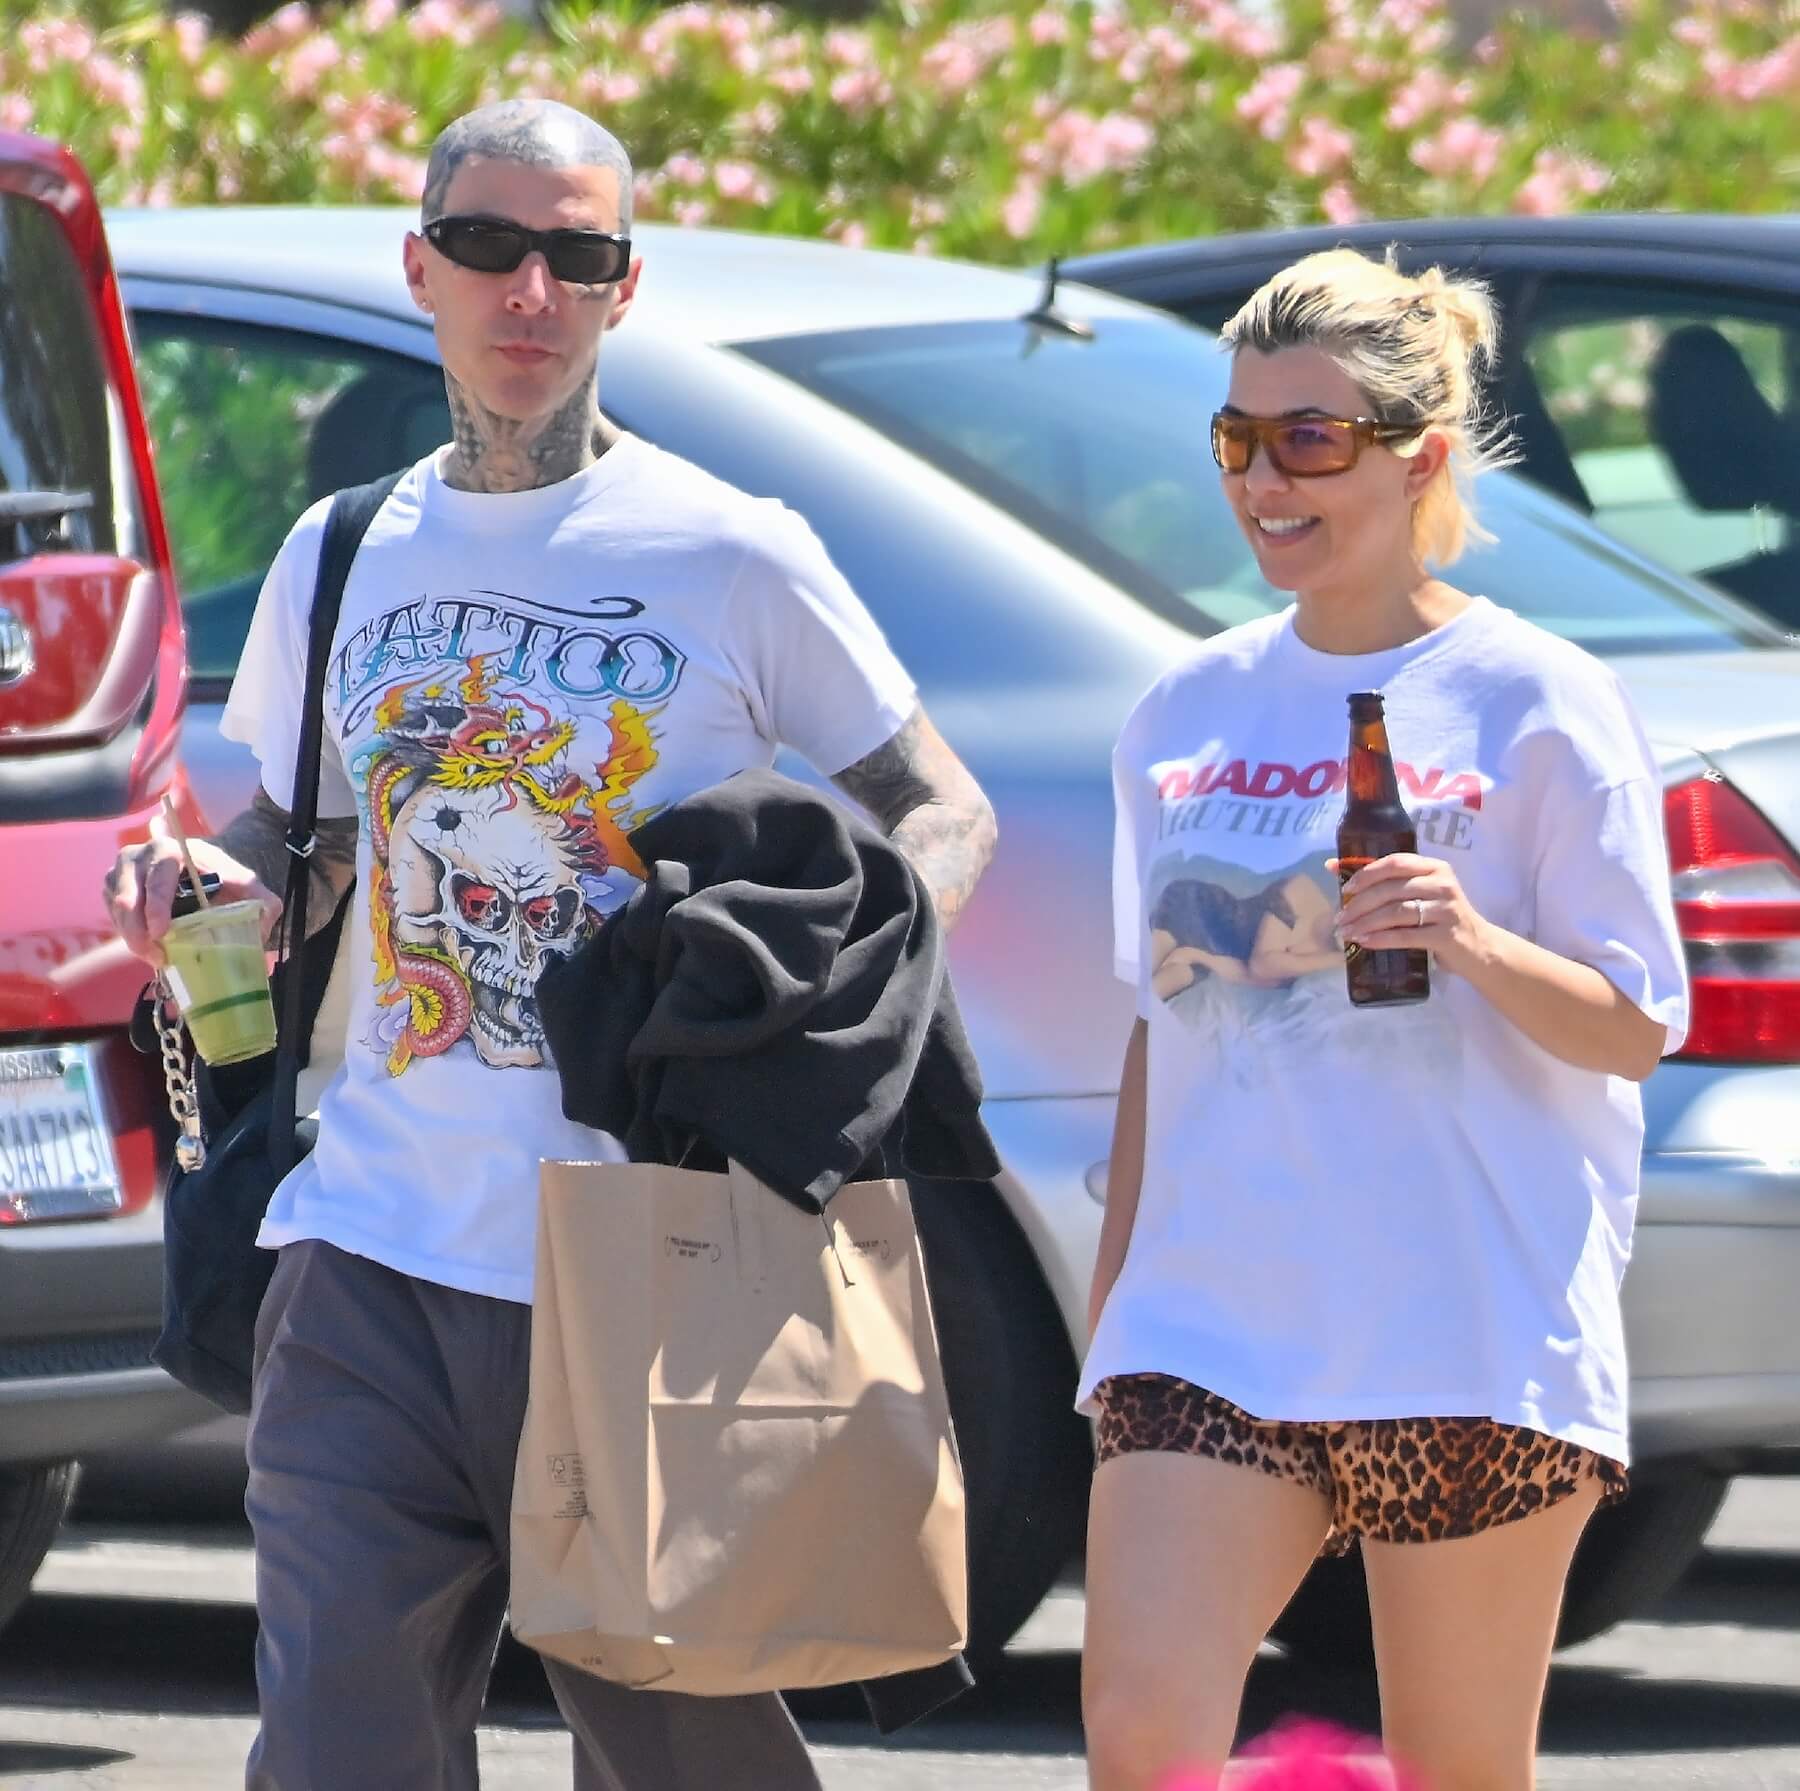 Travis Barker and Kourtney Kardashian walking together through a parking lot